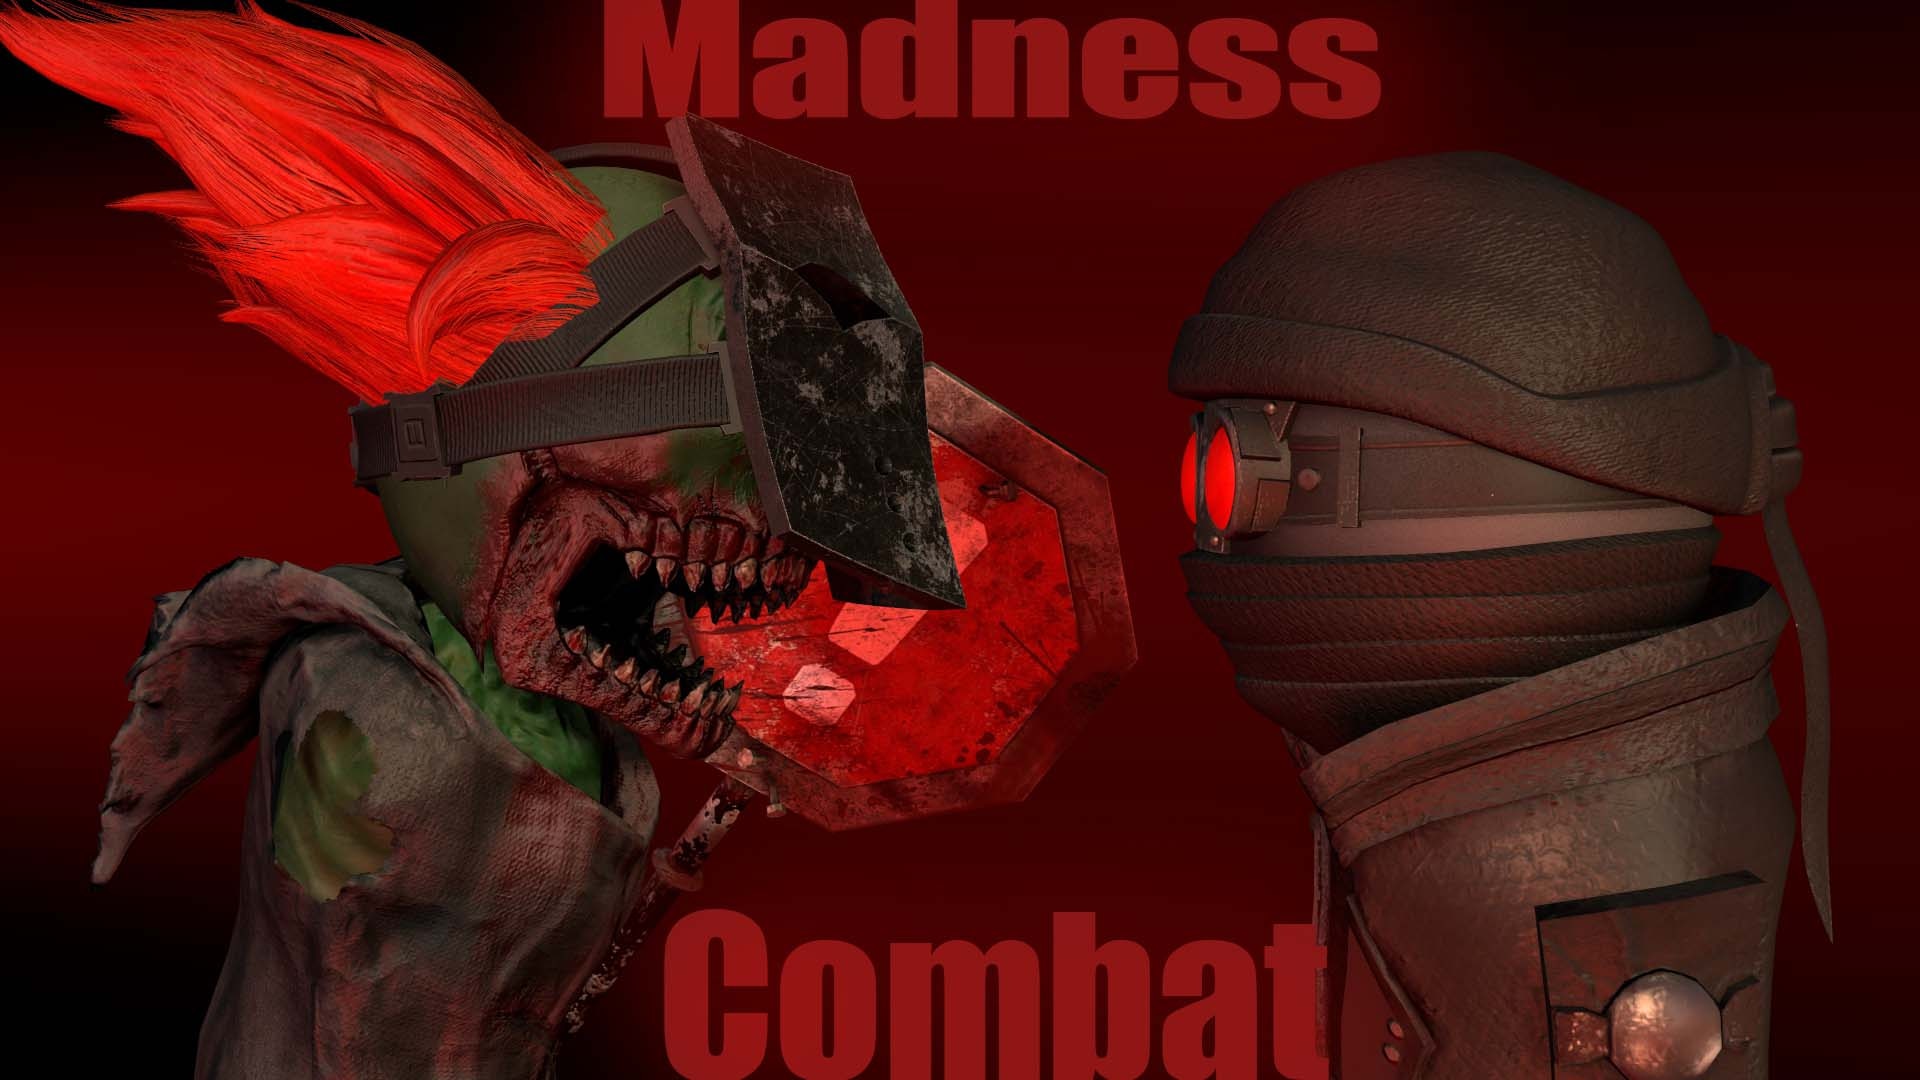 Steam Workshop::Madness Combat addons